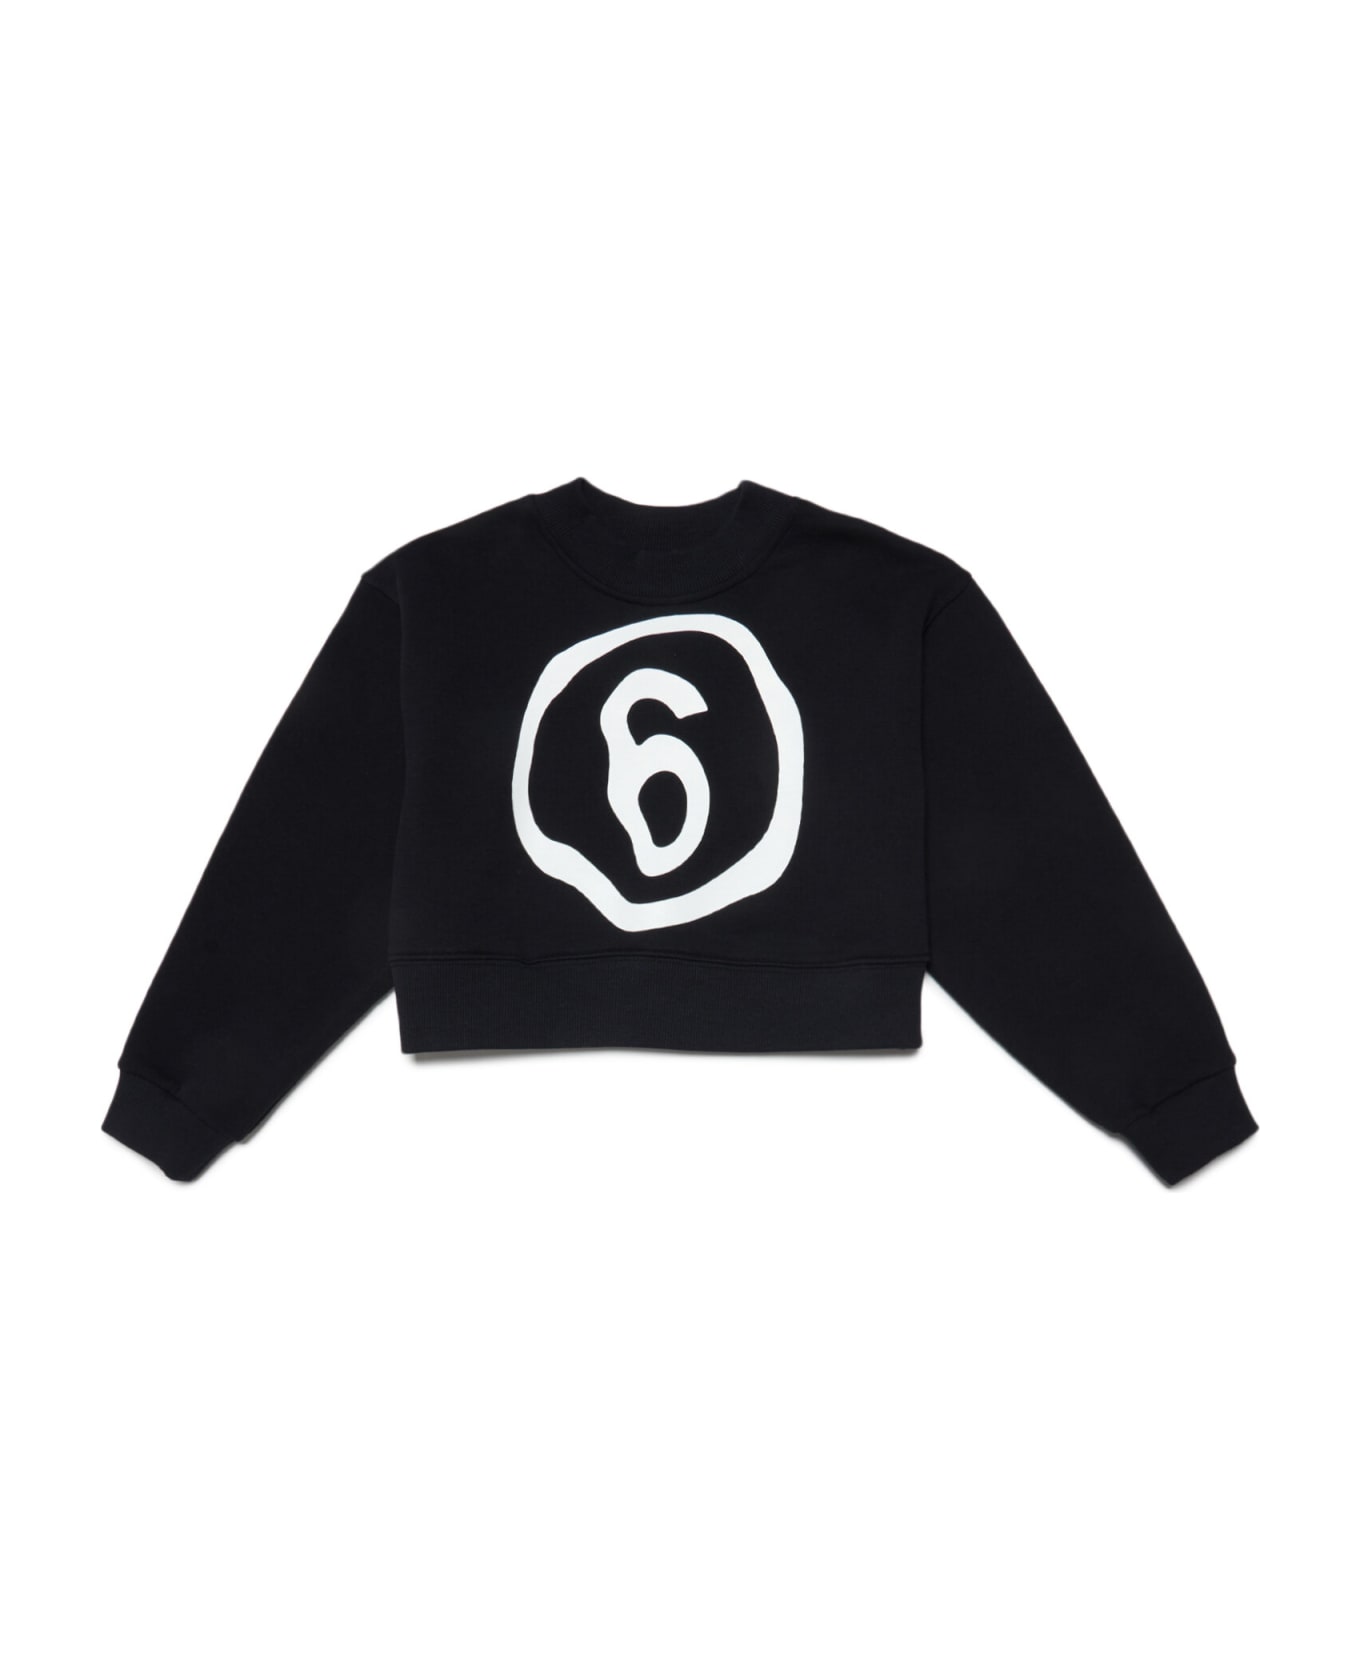 MM6 Maison Margiela Mm6s53u Sweat-shirt Maison Margiela Black Cropped Crew-neck Cotton Sweatshirt With Fluid Effect Logo - M6900